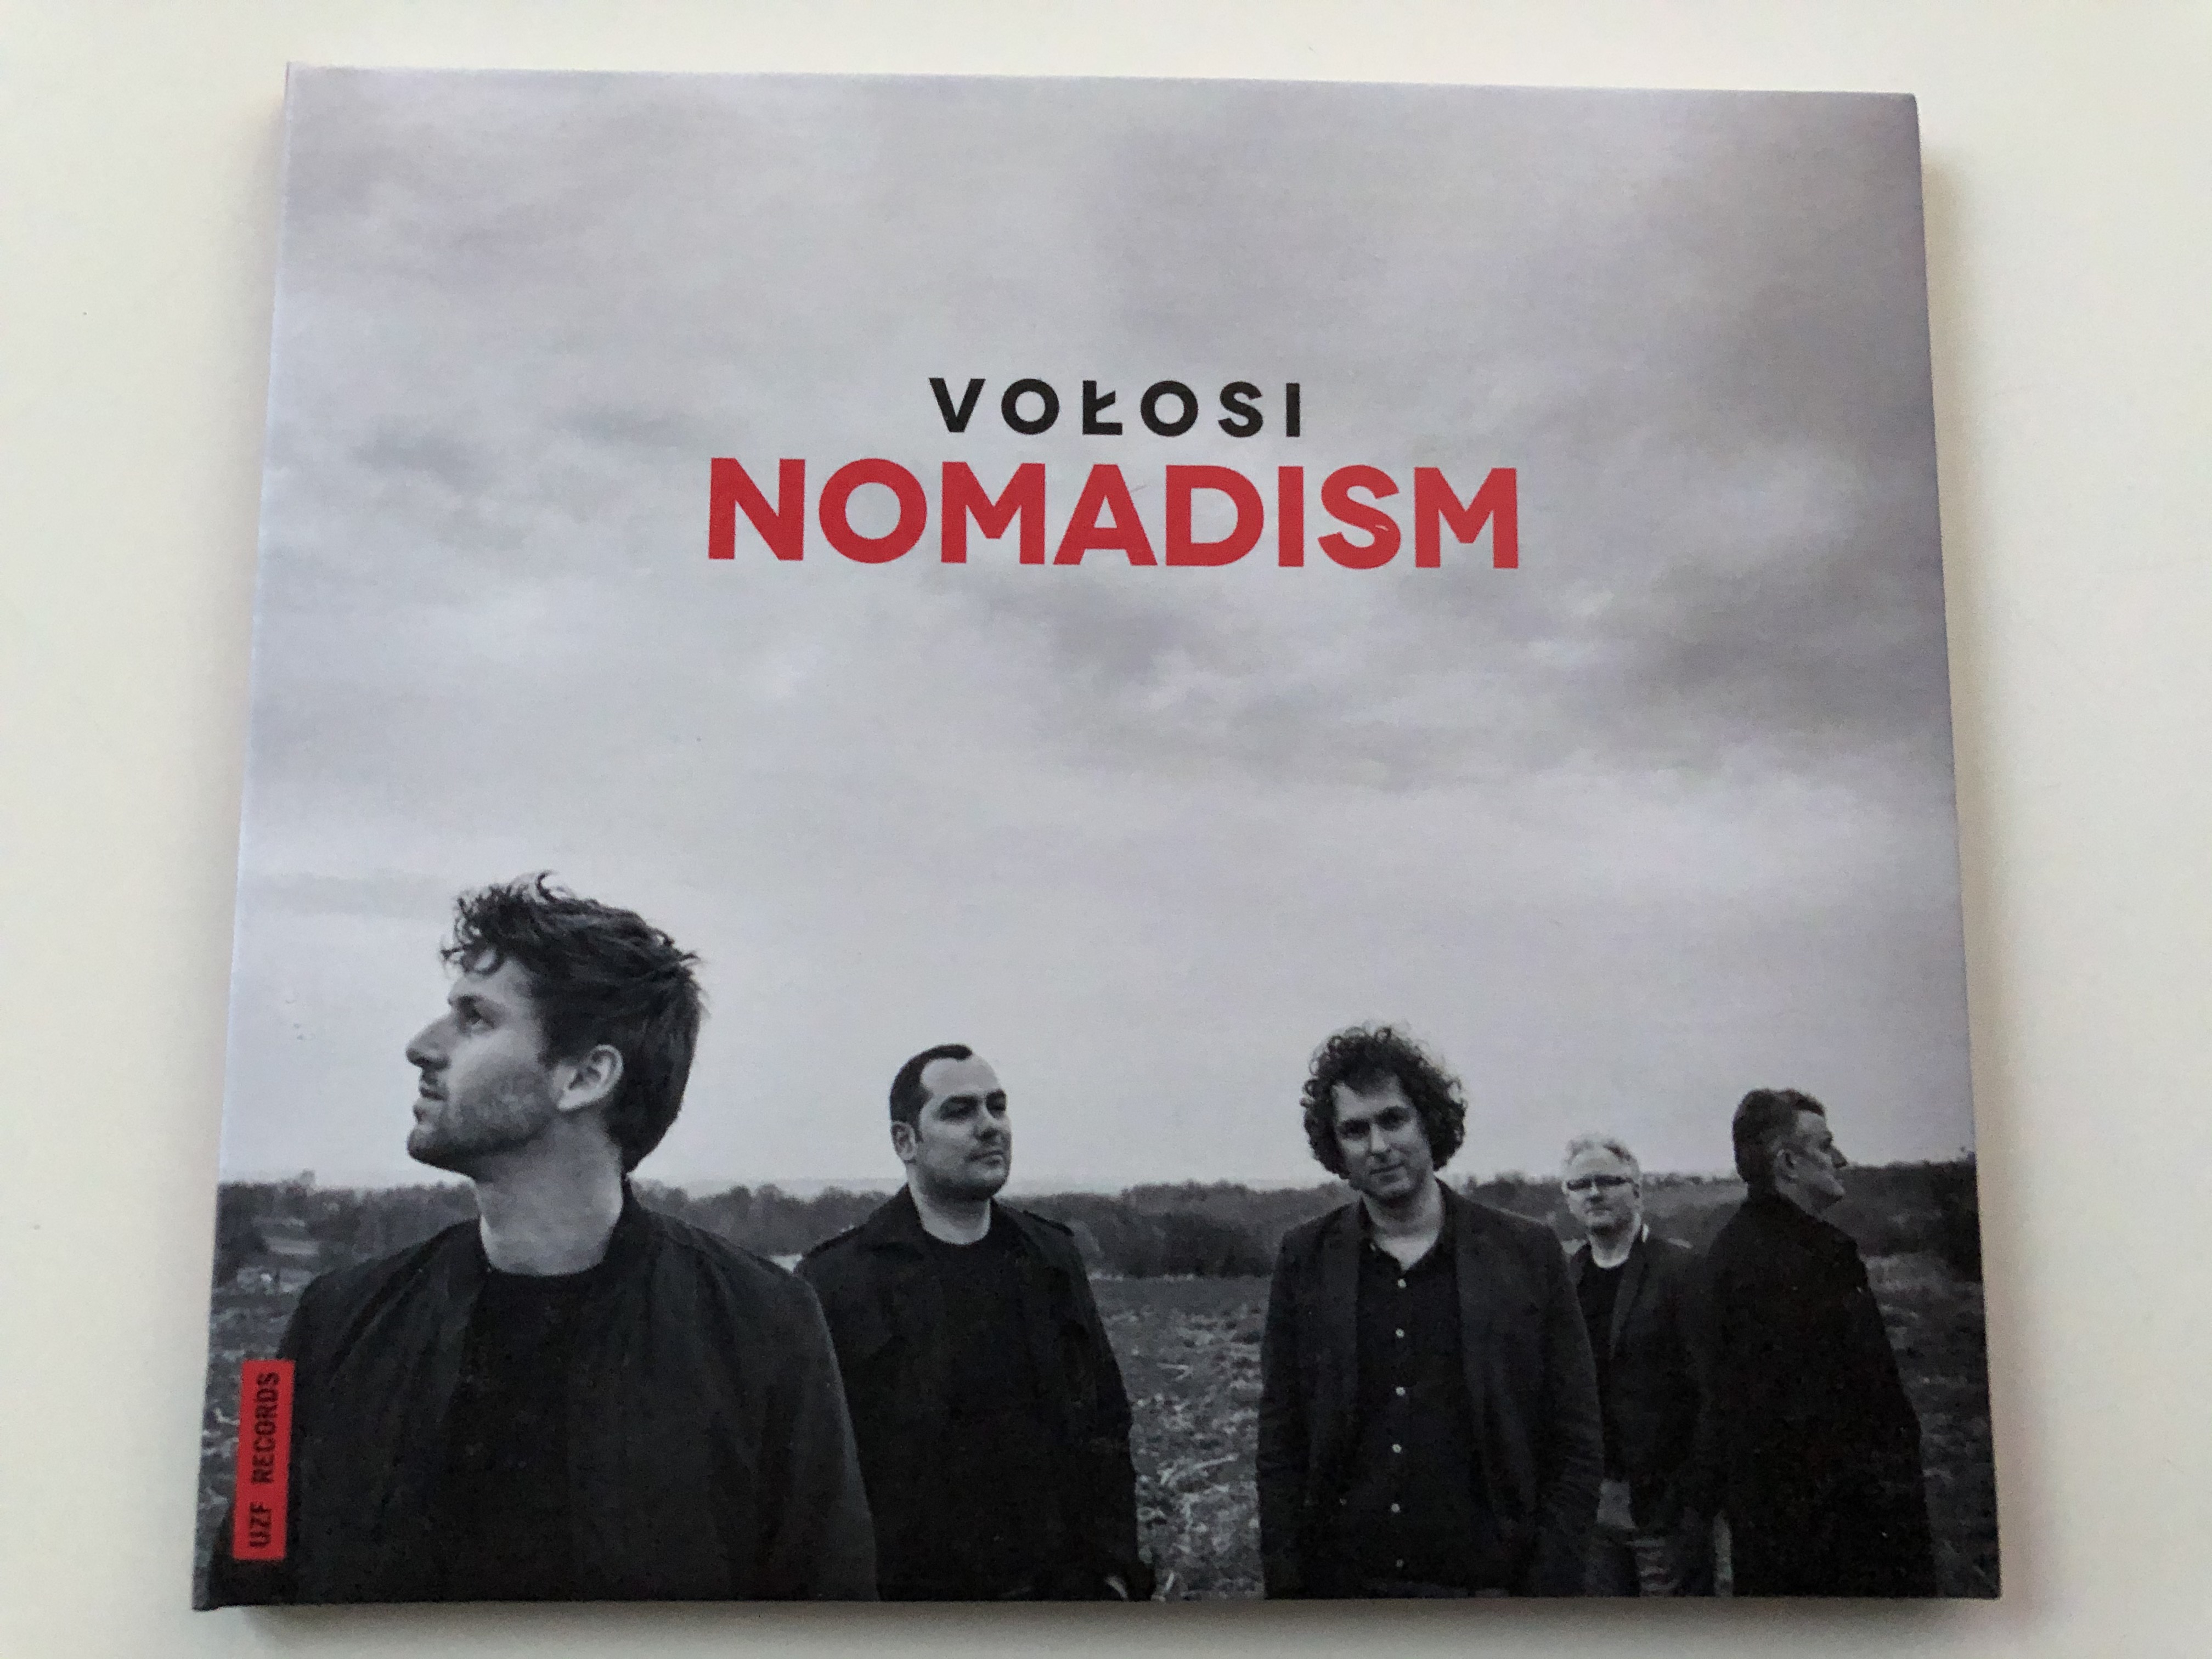 vo-osi-nomadism-unzipped-fly-records-audio-cd-2015-ufcd008-1-.jpg